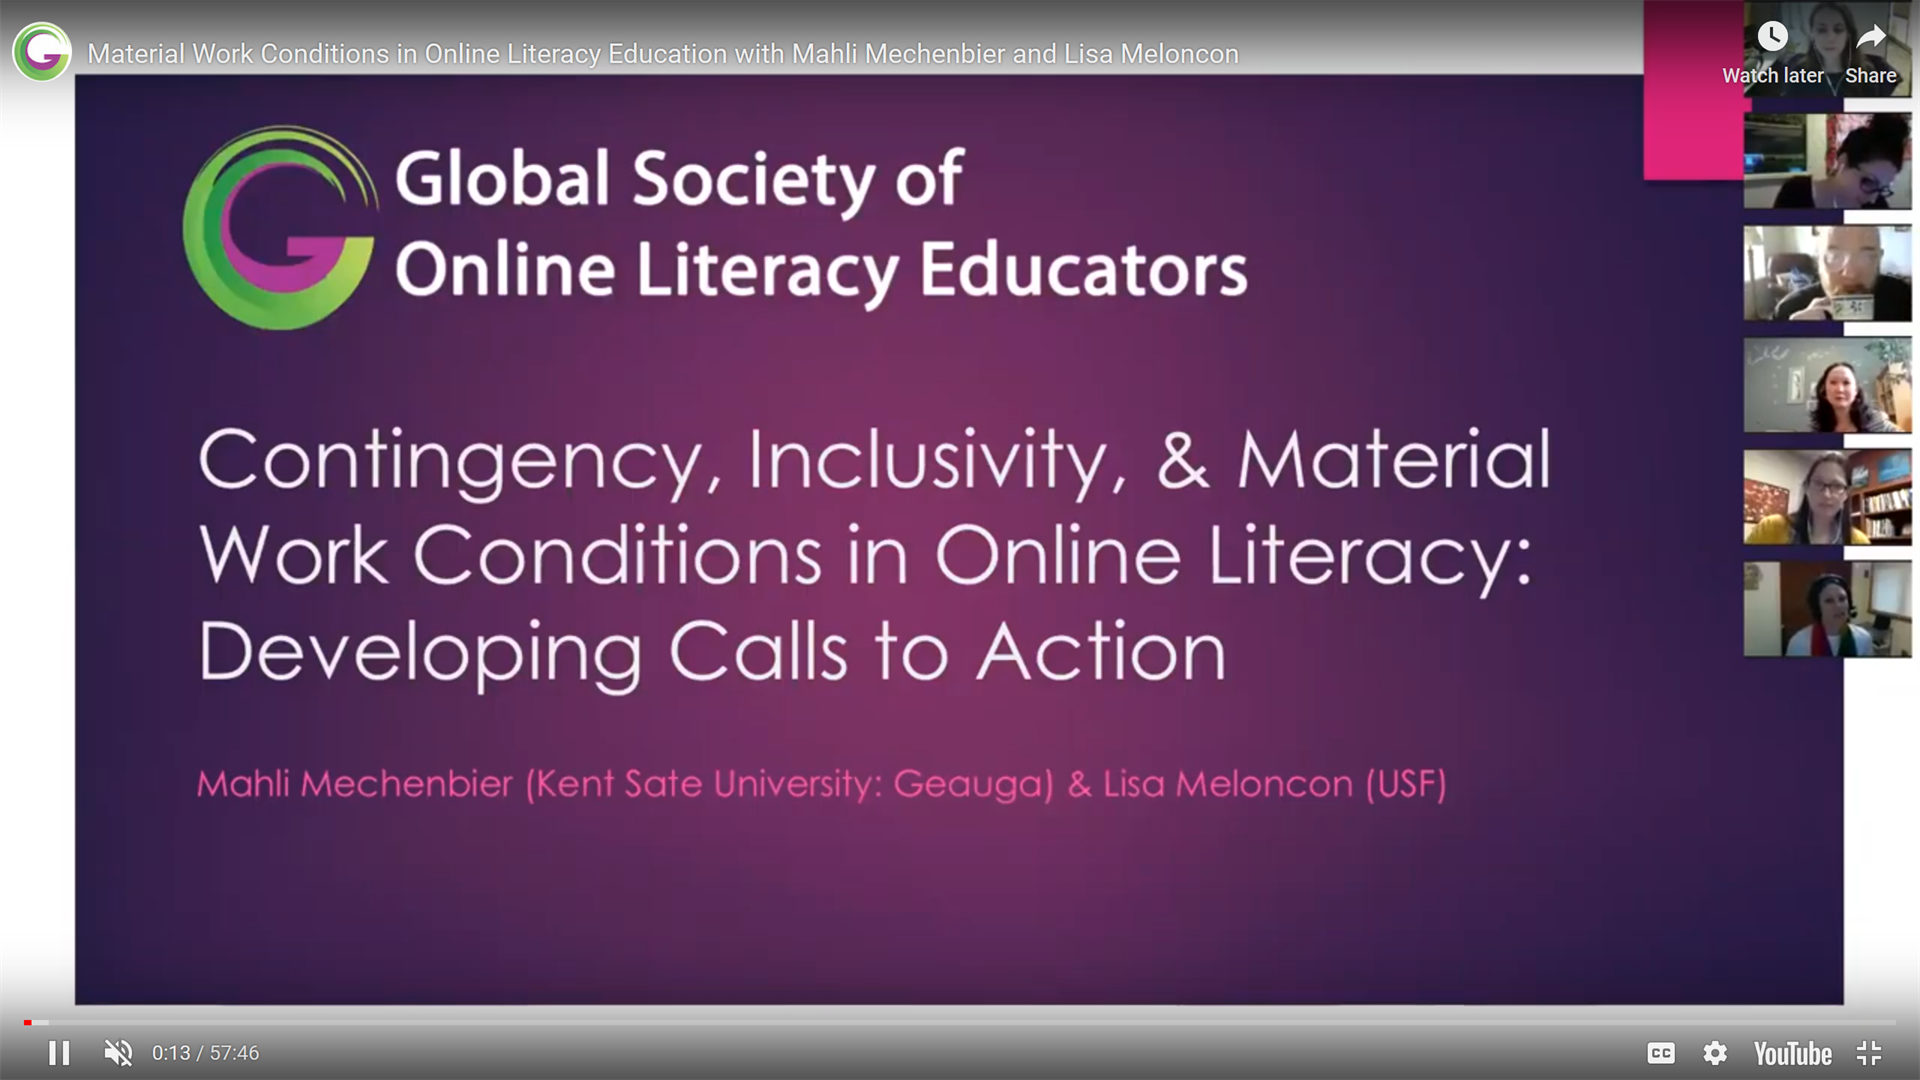 Webinar Screen Capture: Slide title "Global Society of Online Literacy Educators. Welcome to the 2019-2019 Webinar Series!"